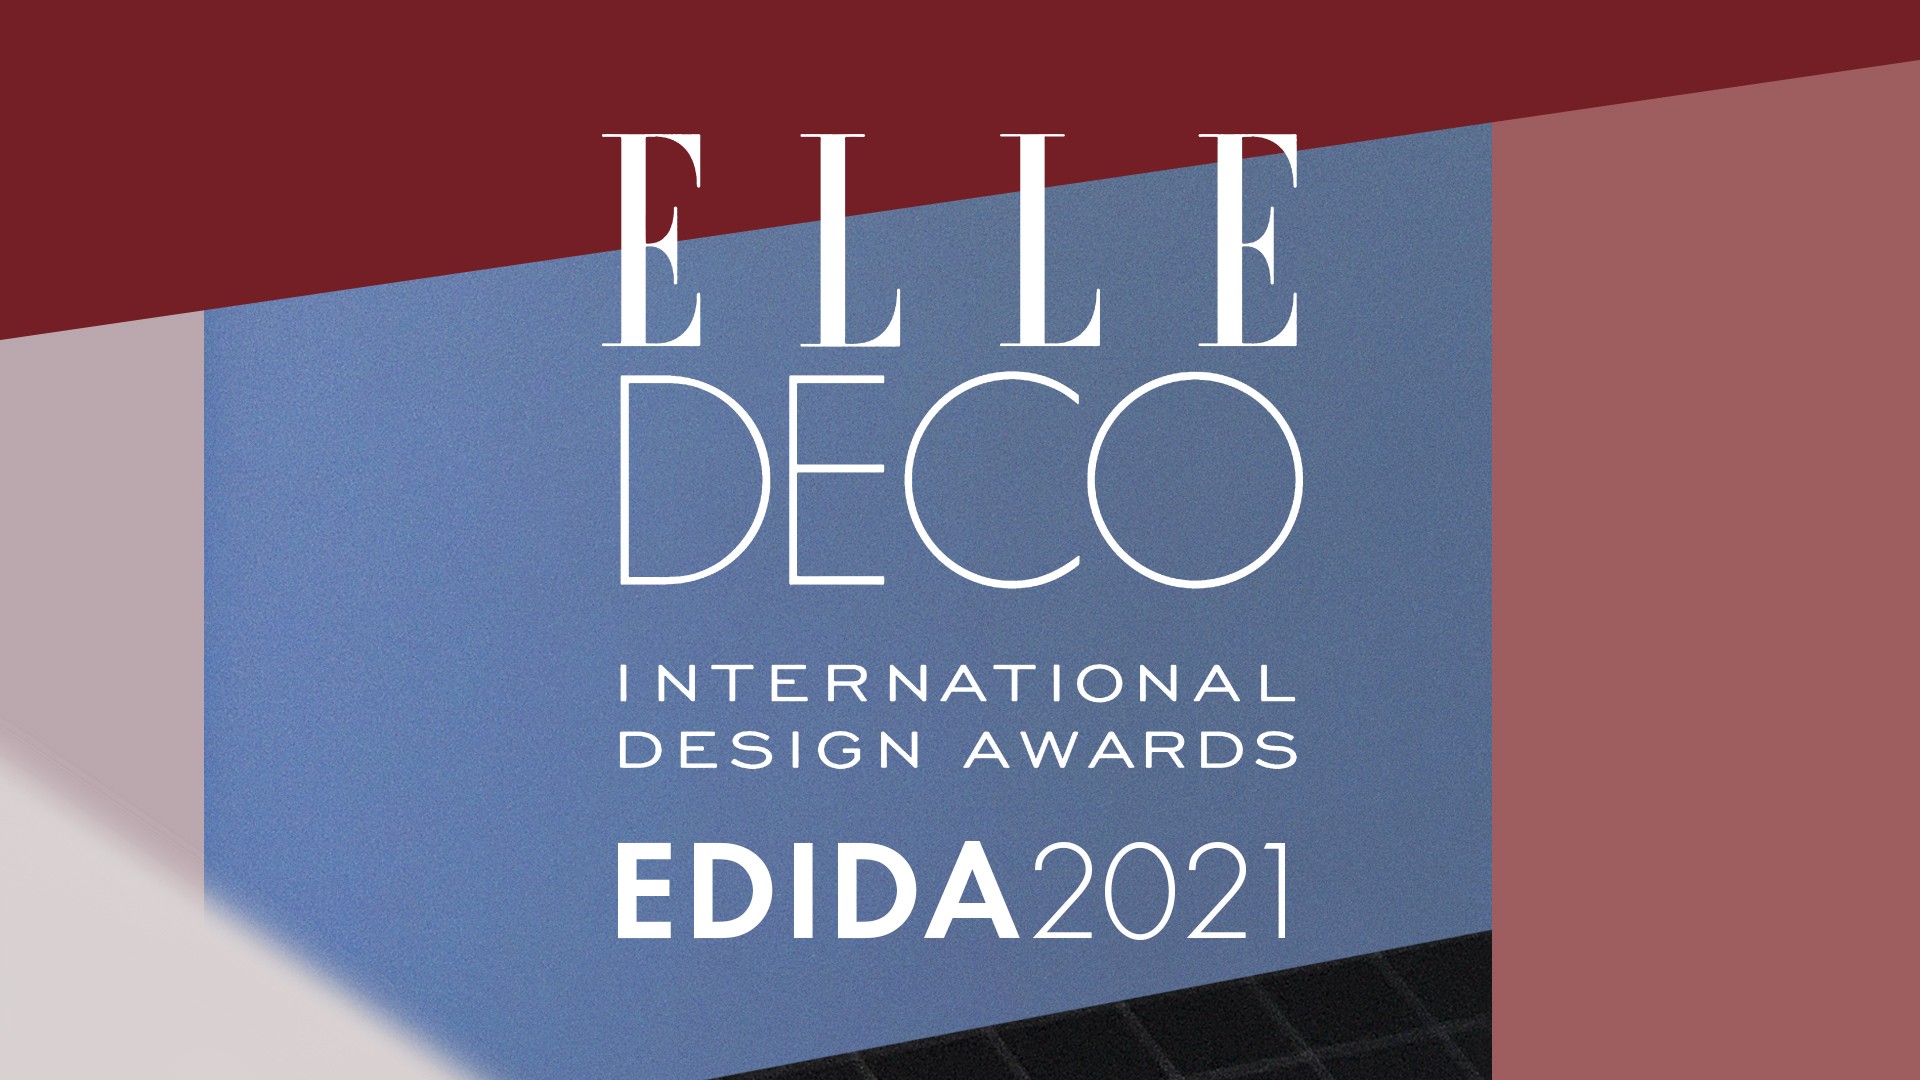 EDIDA 2021: Οι νικητές των διεθνών βραβείων design του ELLE Decoration Οι 25 εκδόσεις του περιοδικού σε όλο τον κόσμο ψηφίσαμε και βραβεύσαμε τα καλύτερα έπιπλα και αντικείμενα, αλλά και τους πιο δημιουργικούς σχεδιαστές της χρονιάς. Για 2η συνεχόμενη χρονιά, η λαμπερή απονομή έγινε διαδικτυακά πάντα σε συνεργασία με την MGallery, δίνοντας σε όλους την δυνατότητα να την παρακολουθήσουν από την άνεση του σπιτιού τους.